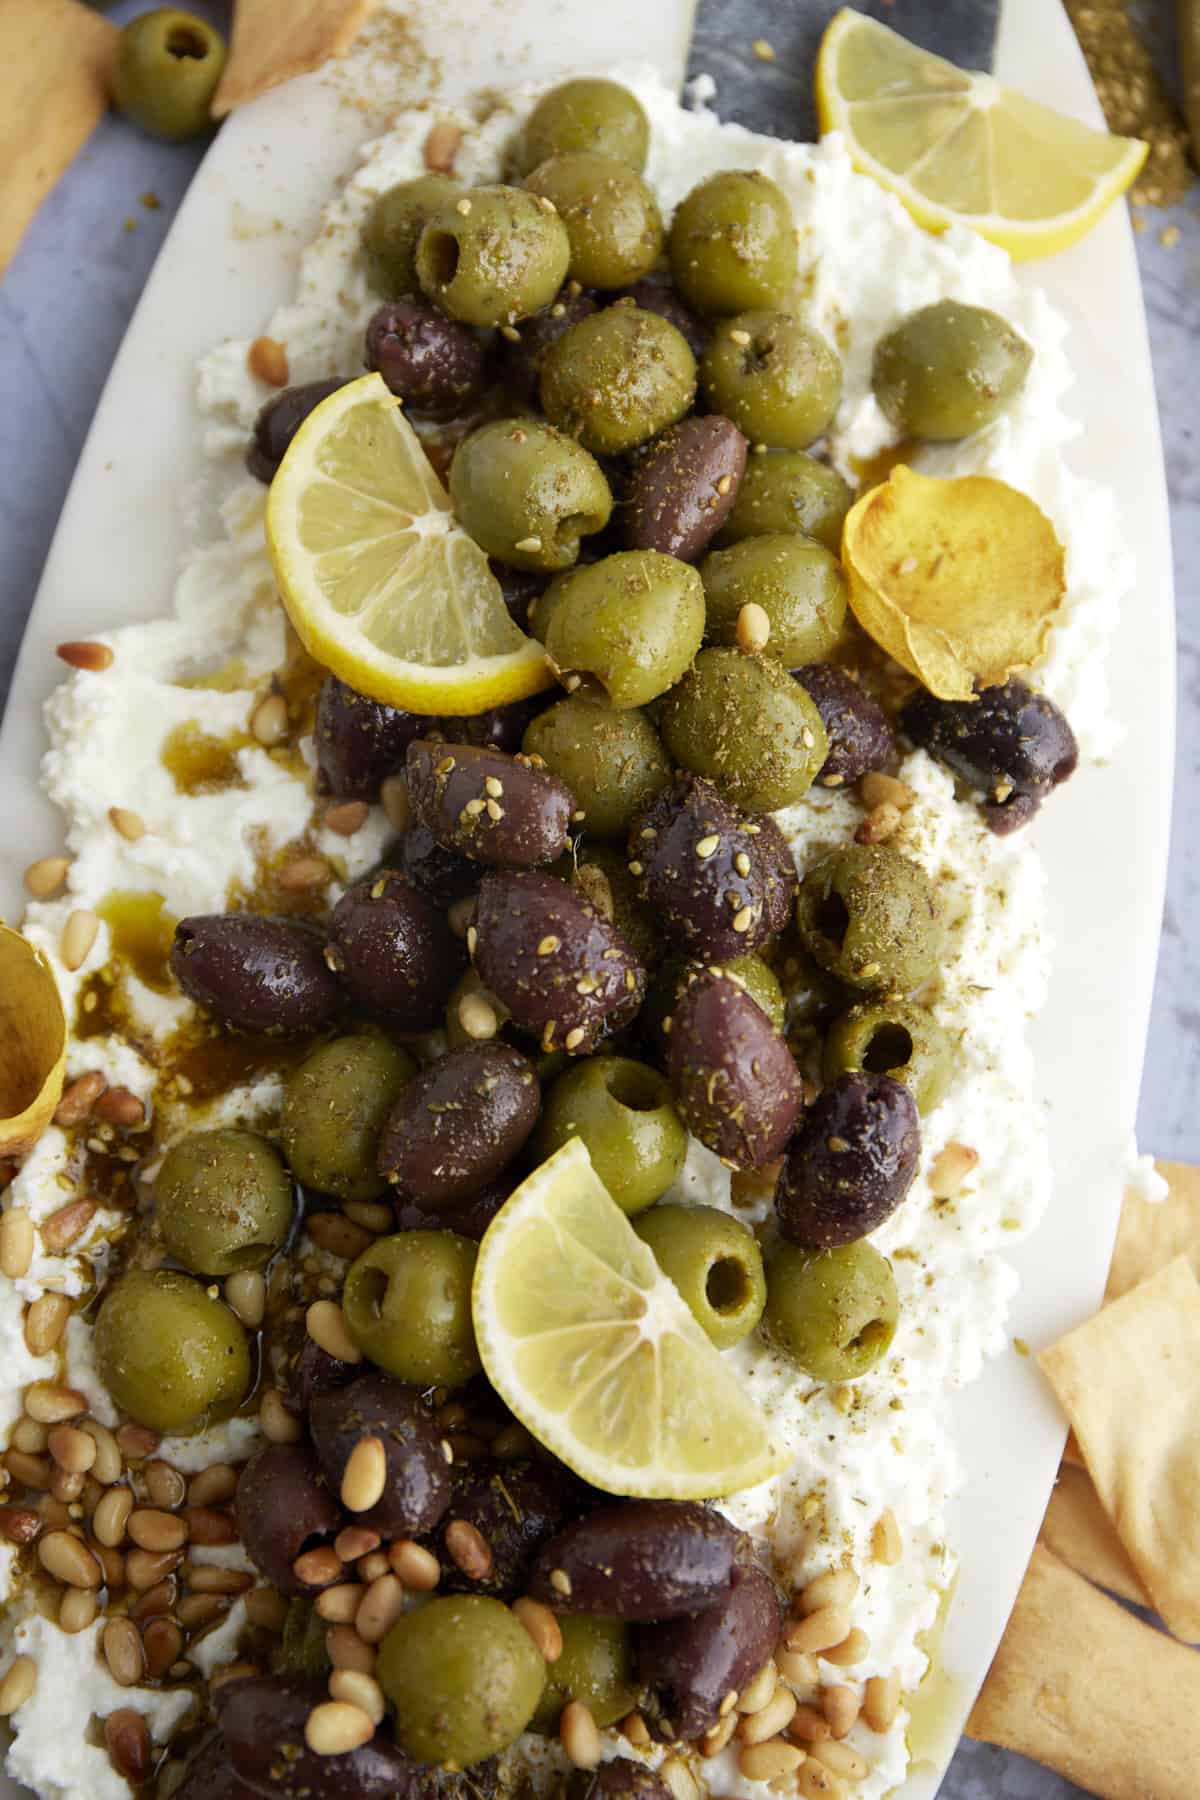 a feta board topped with marinated kalamata and green olives, lemon wedges, and seasonings.